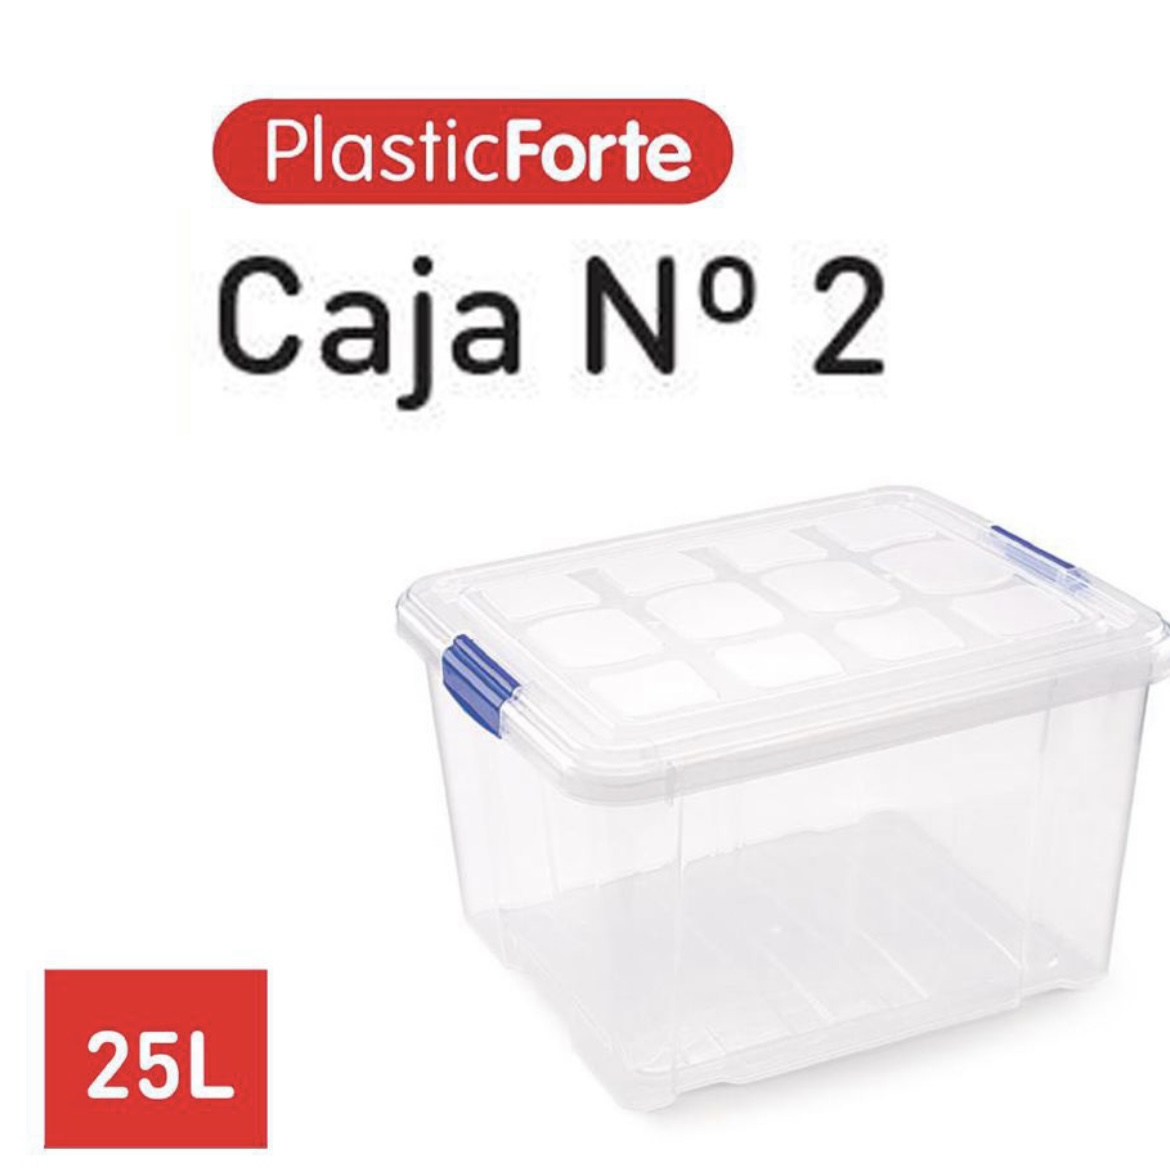 Nº 2 Caja de almacenaje 25 litros - Plastic Forte